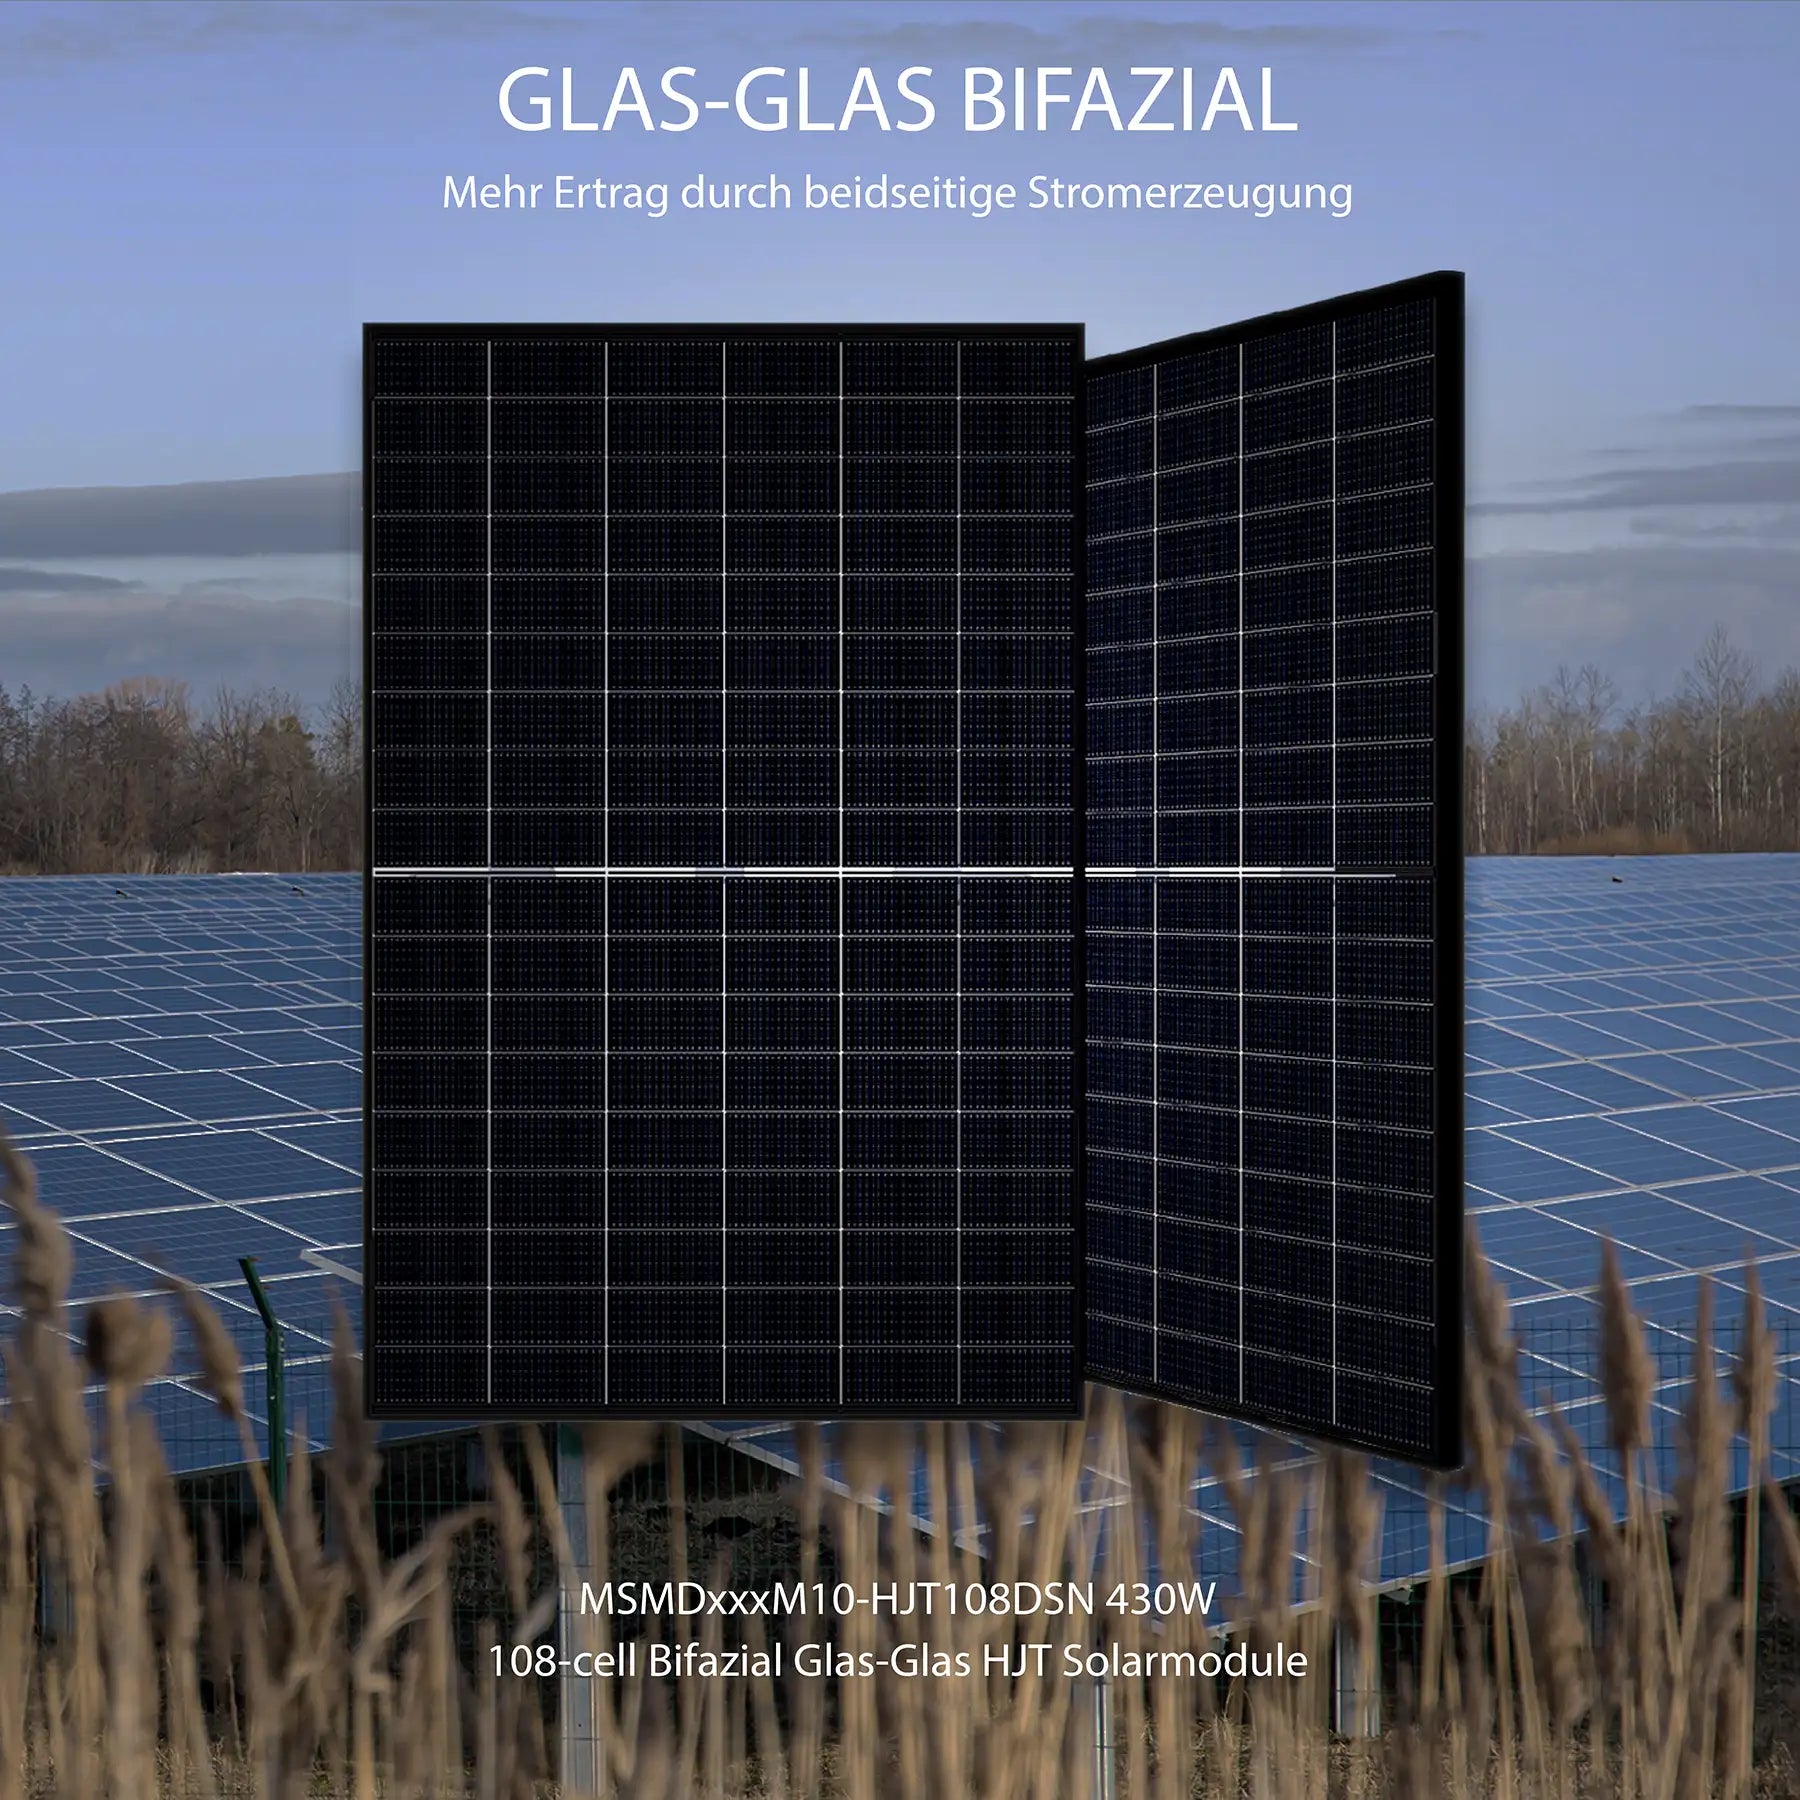 MSMDxxxM10 HJT108DSN 430W solar module glass-glass bifacial HJT